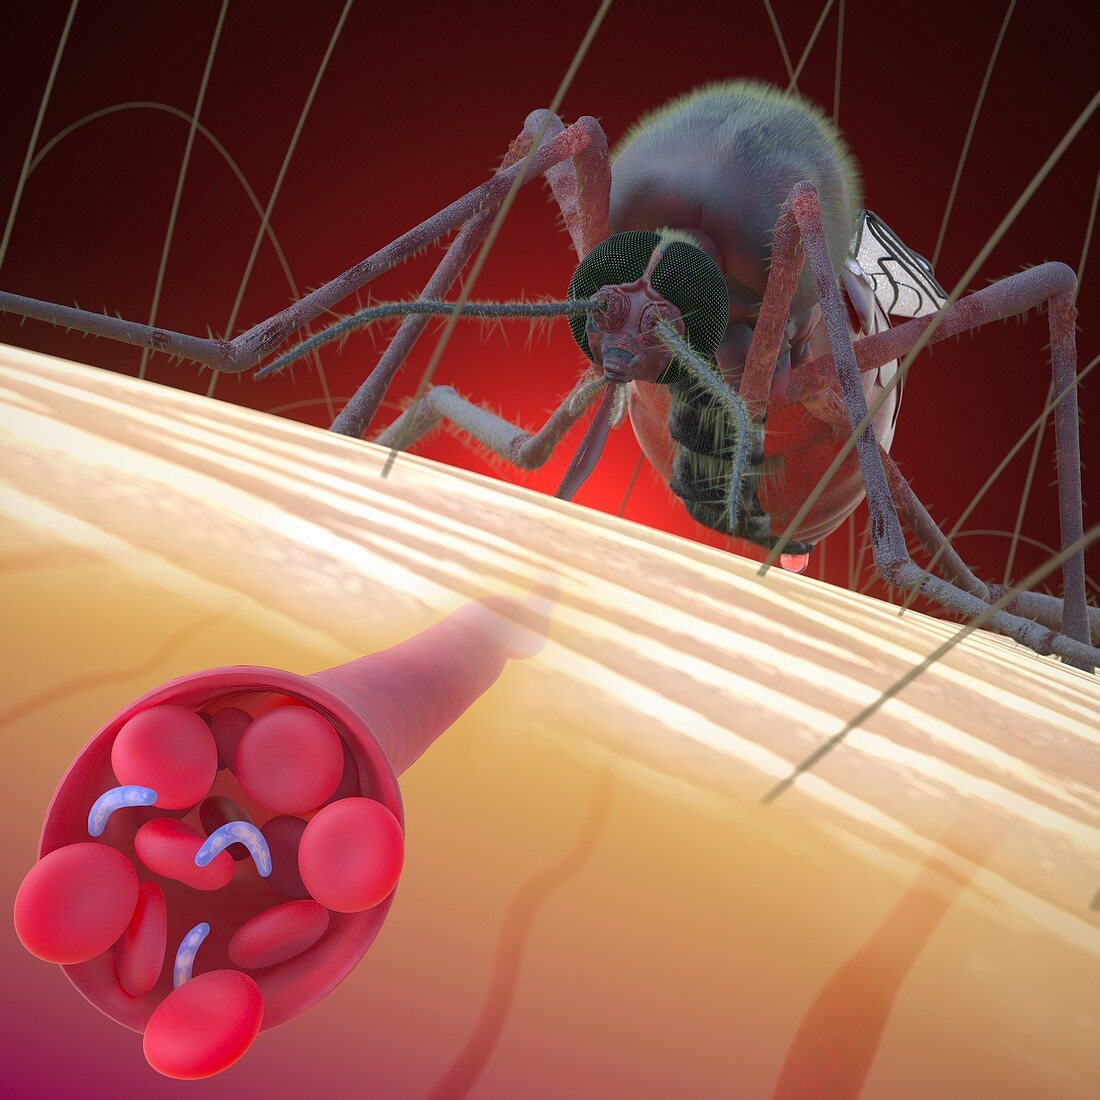 Mosquito transmitting malaria, illustration